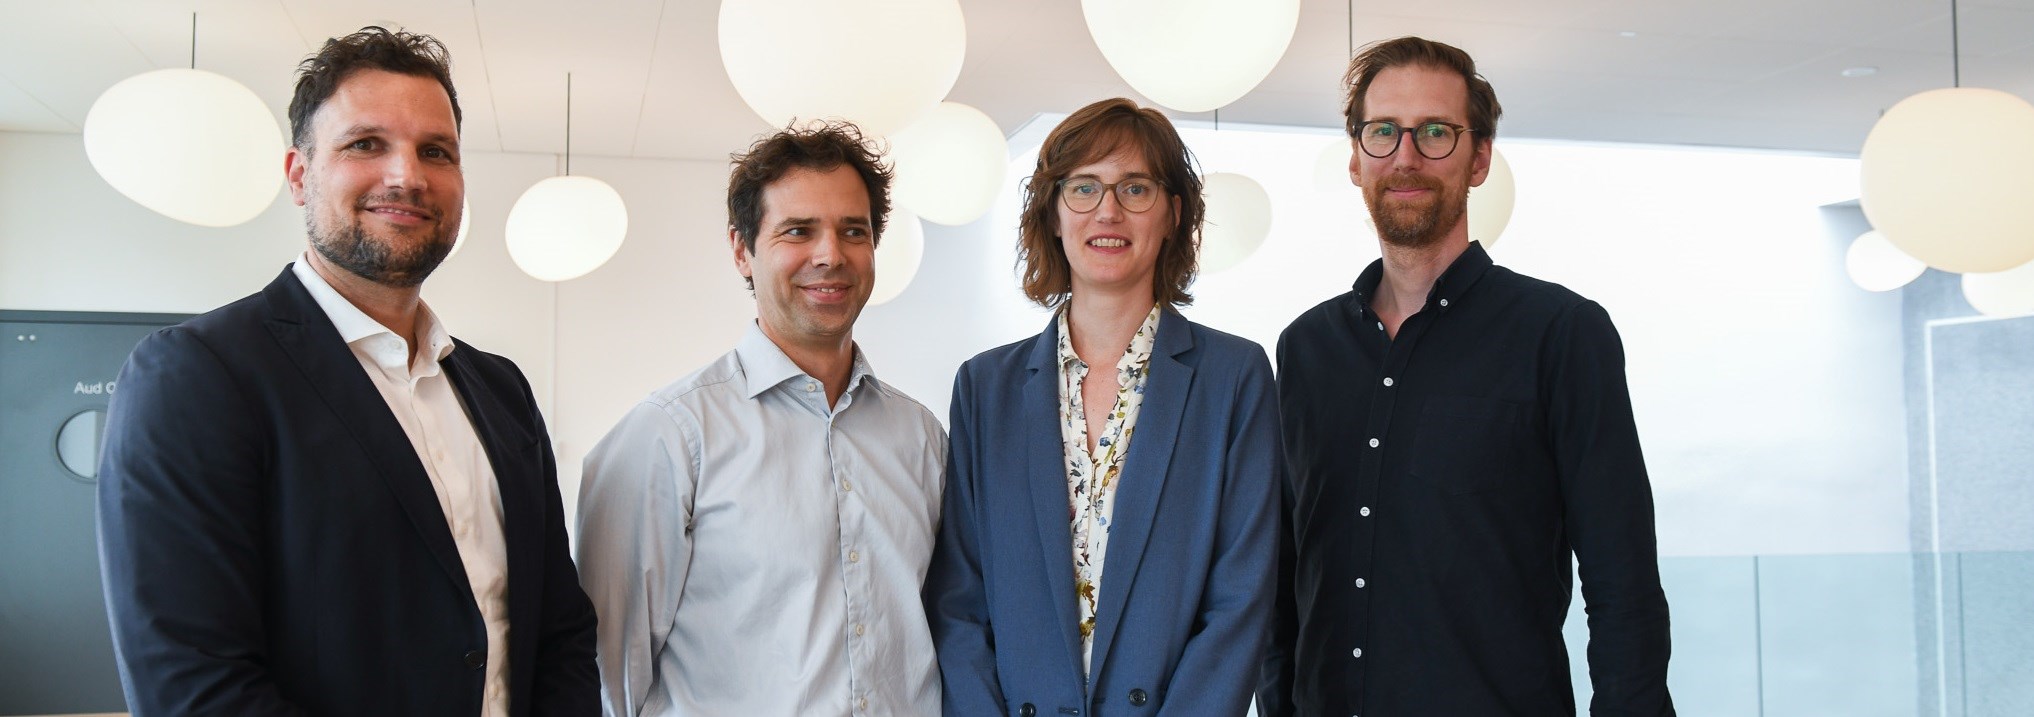 Steffen Juranek, Vincent Somville, Malin Arve and Eirik Sjåholm Knudsen have been promoted to full professor at NHH Norwegian School of Economics. Photo: Ingunn Gjærde